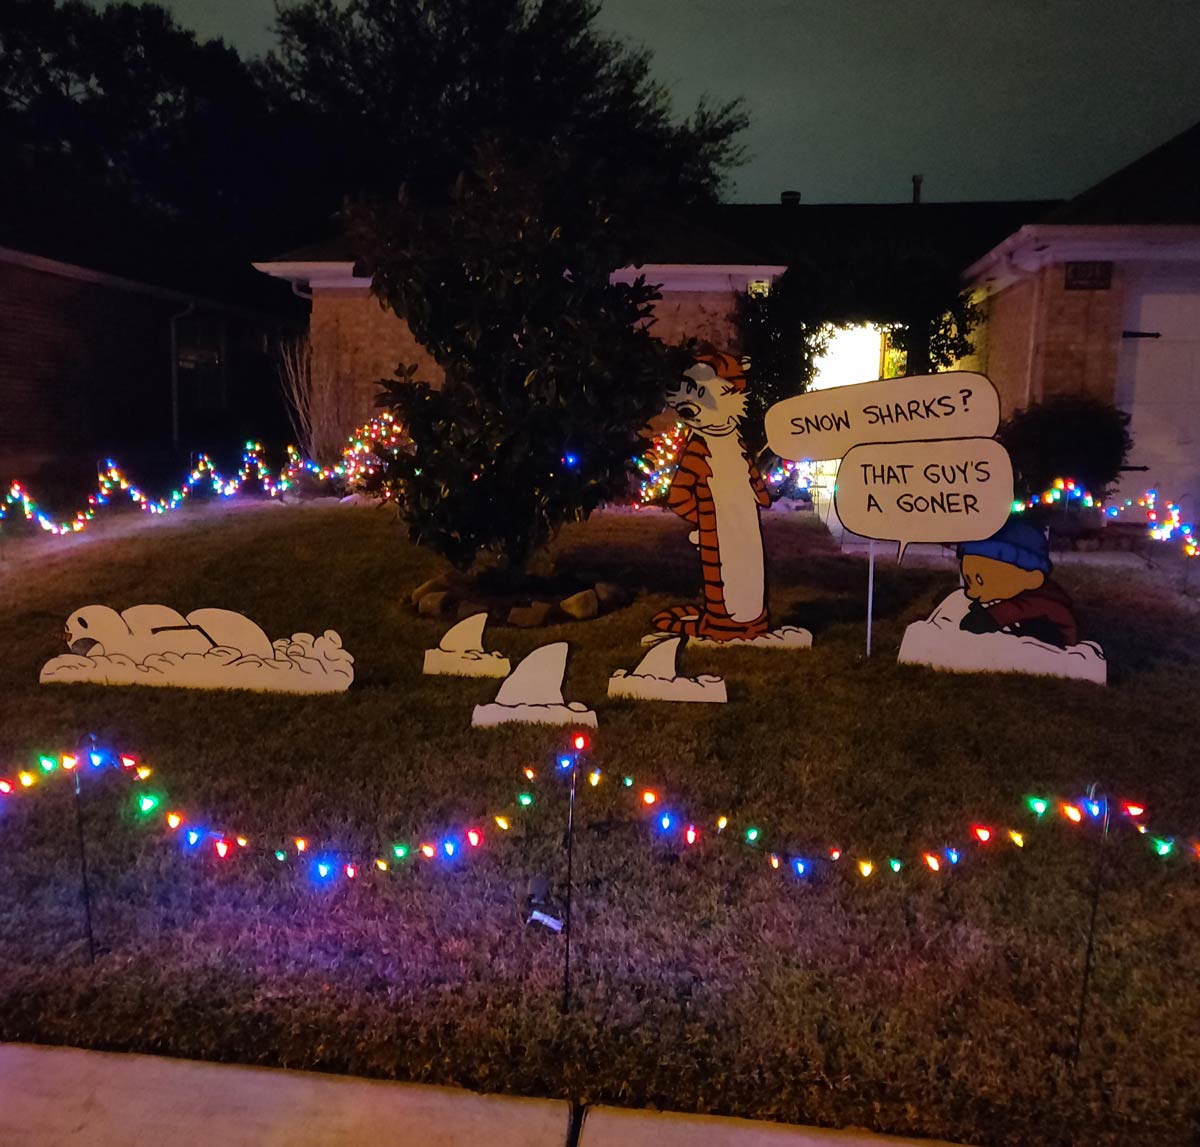 This festive yard display in my neighborhood